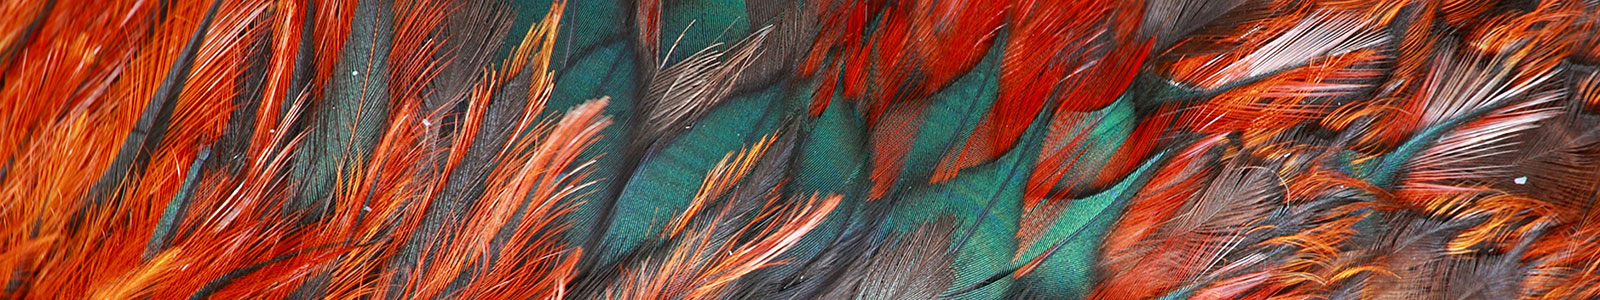 №1872 - Необычные перья жар птицы